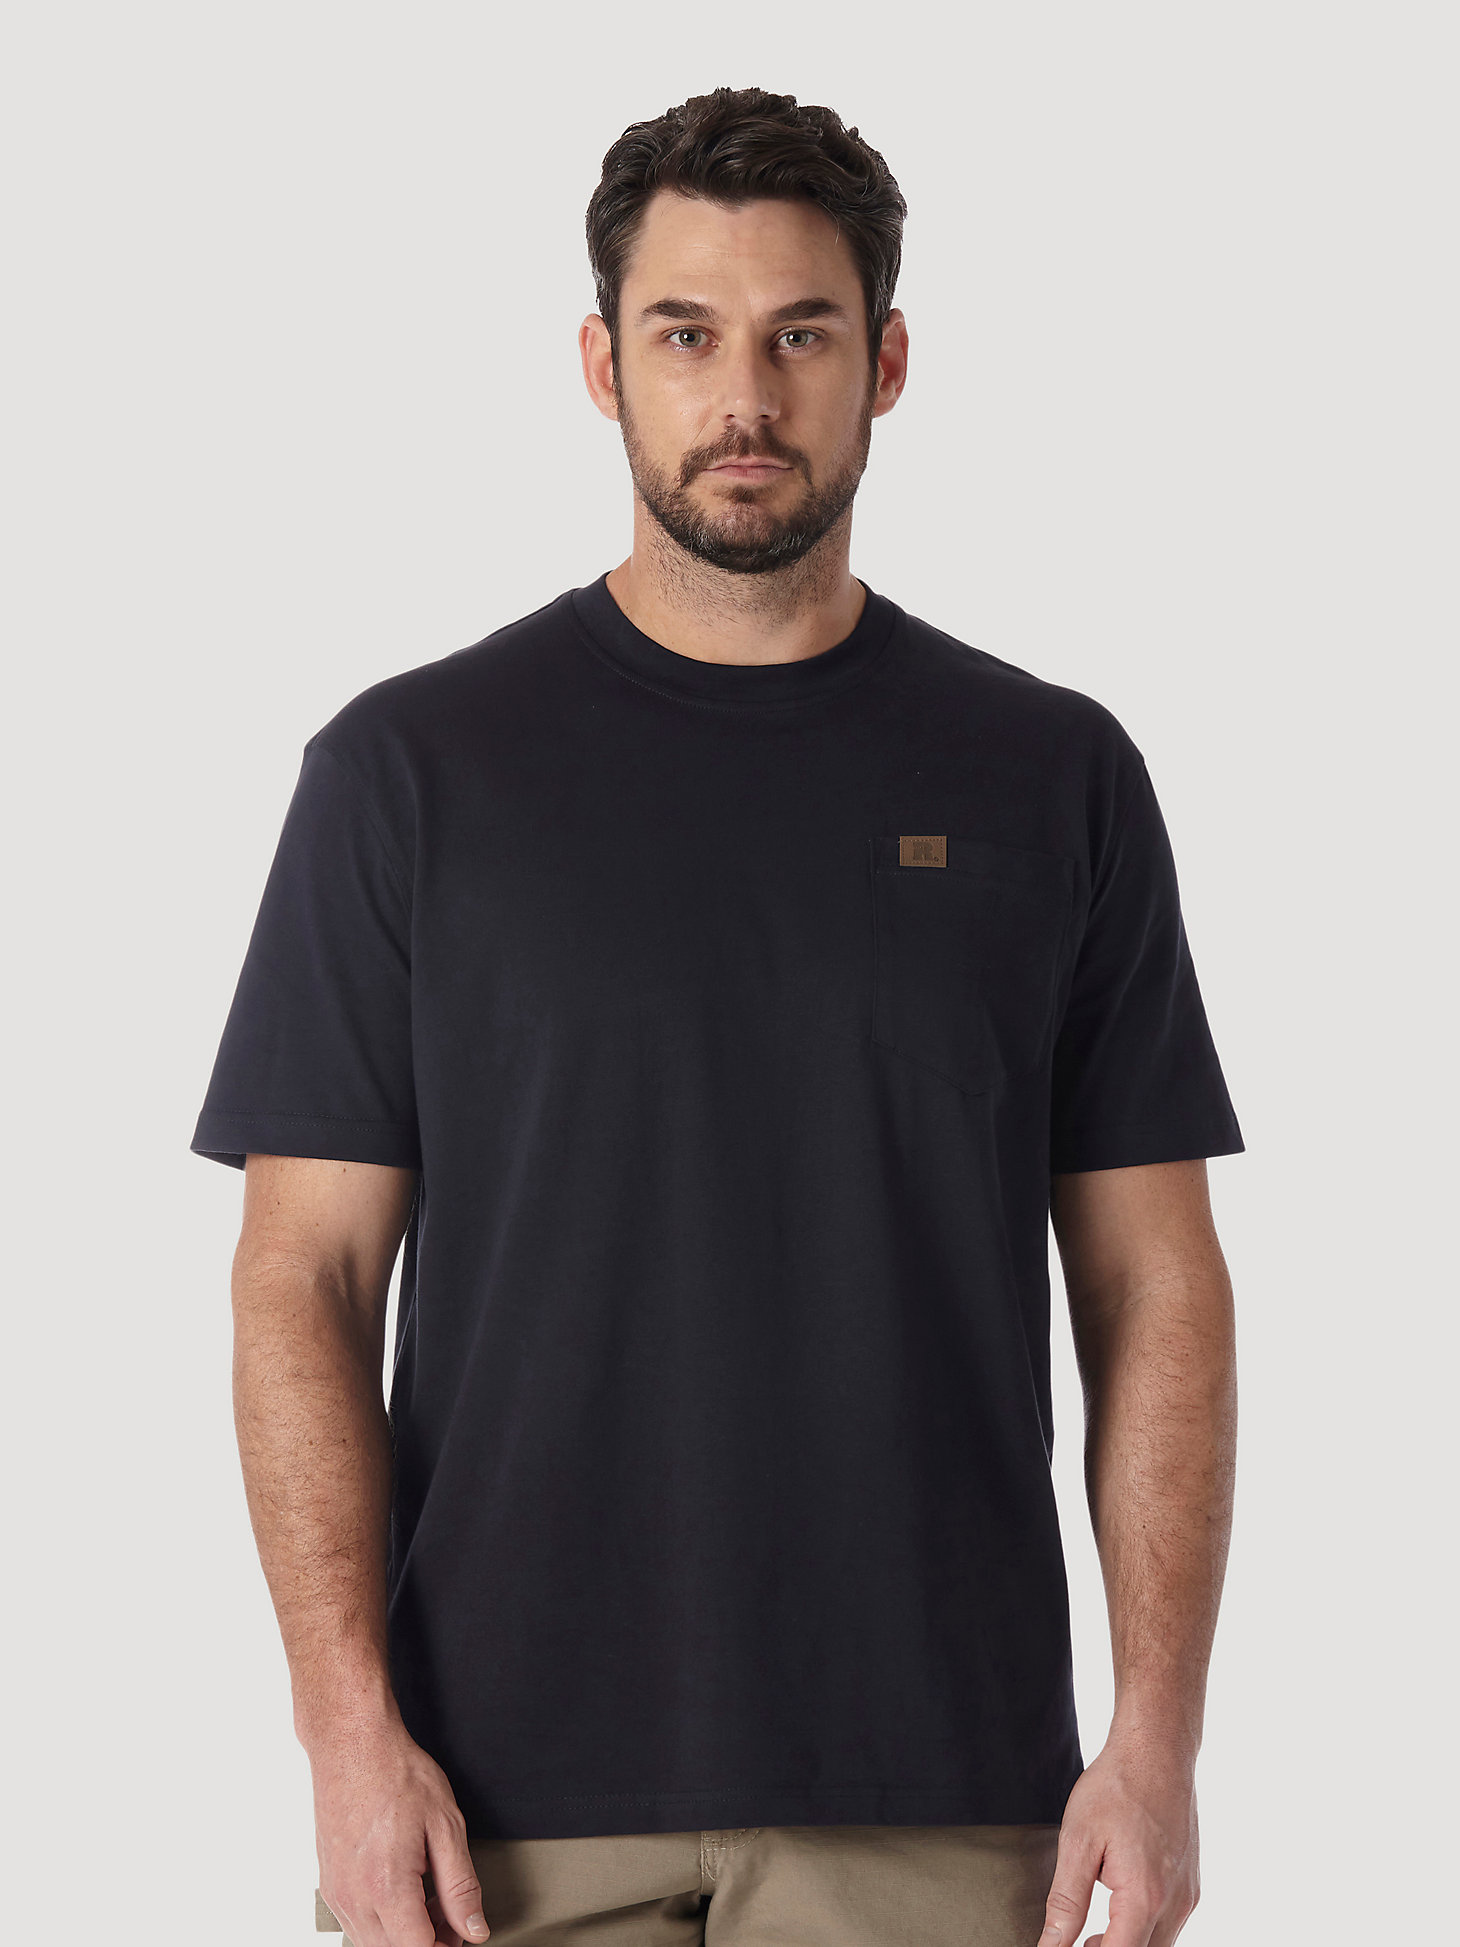 Wrangler® RIGGS Workwear® Short Sleeve Pocket T-Shirt in Navy alternative view 1